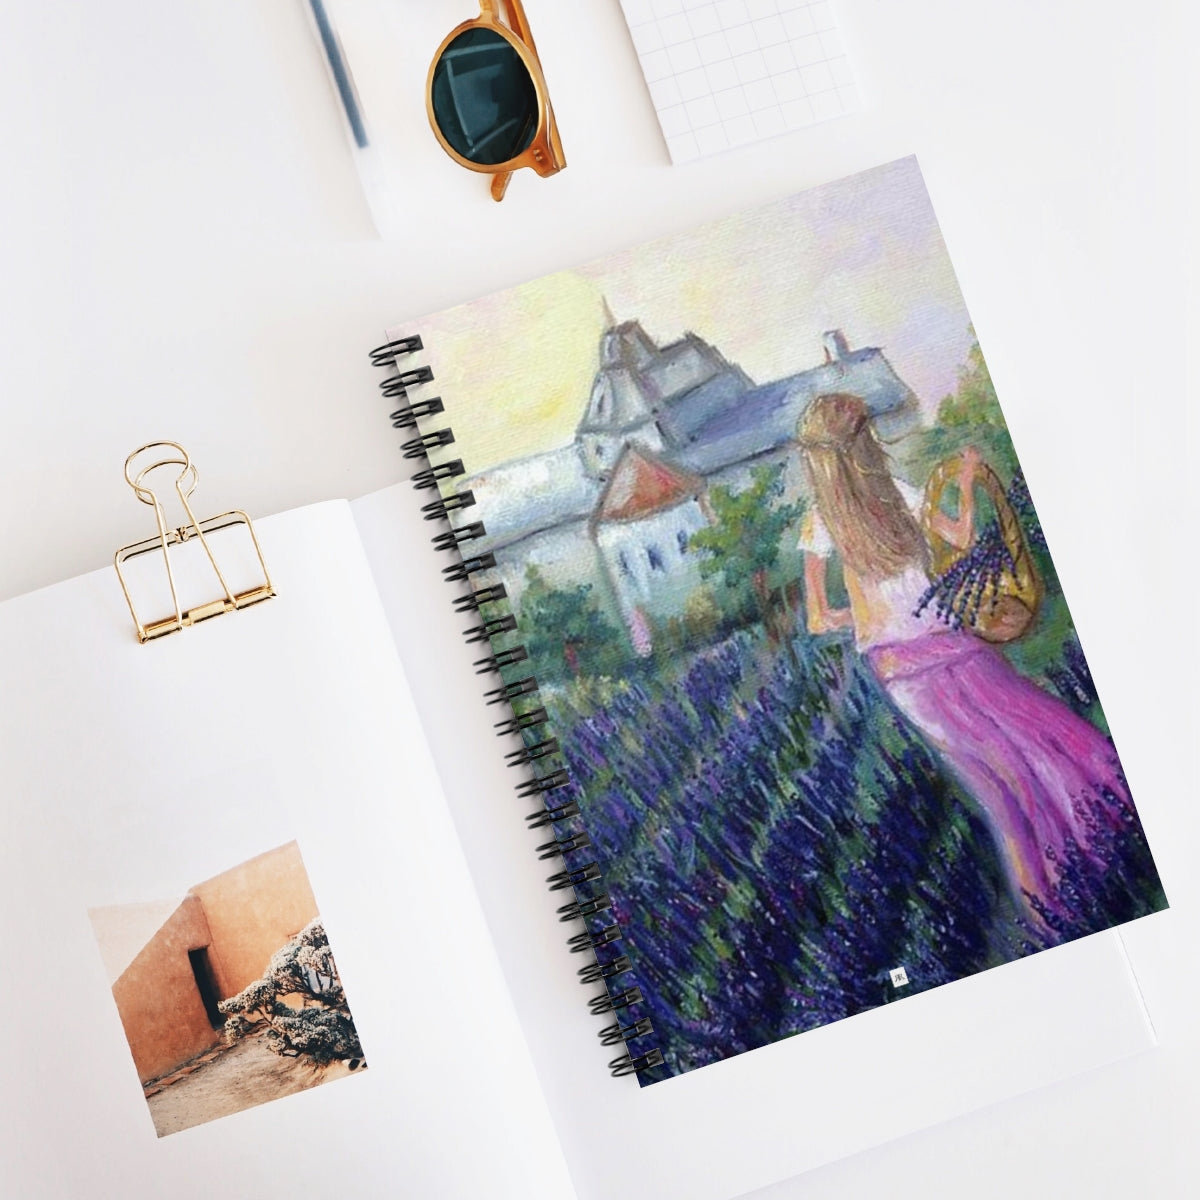 Girl in a Lavender Field Spiral Notebook